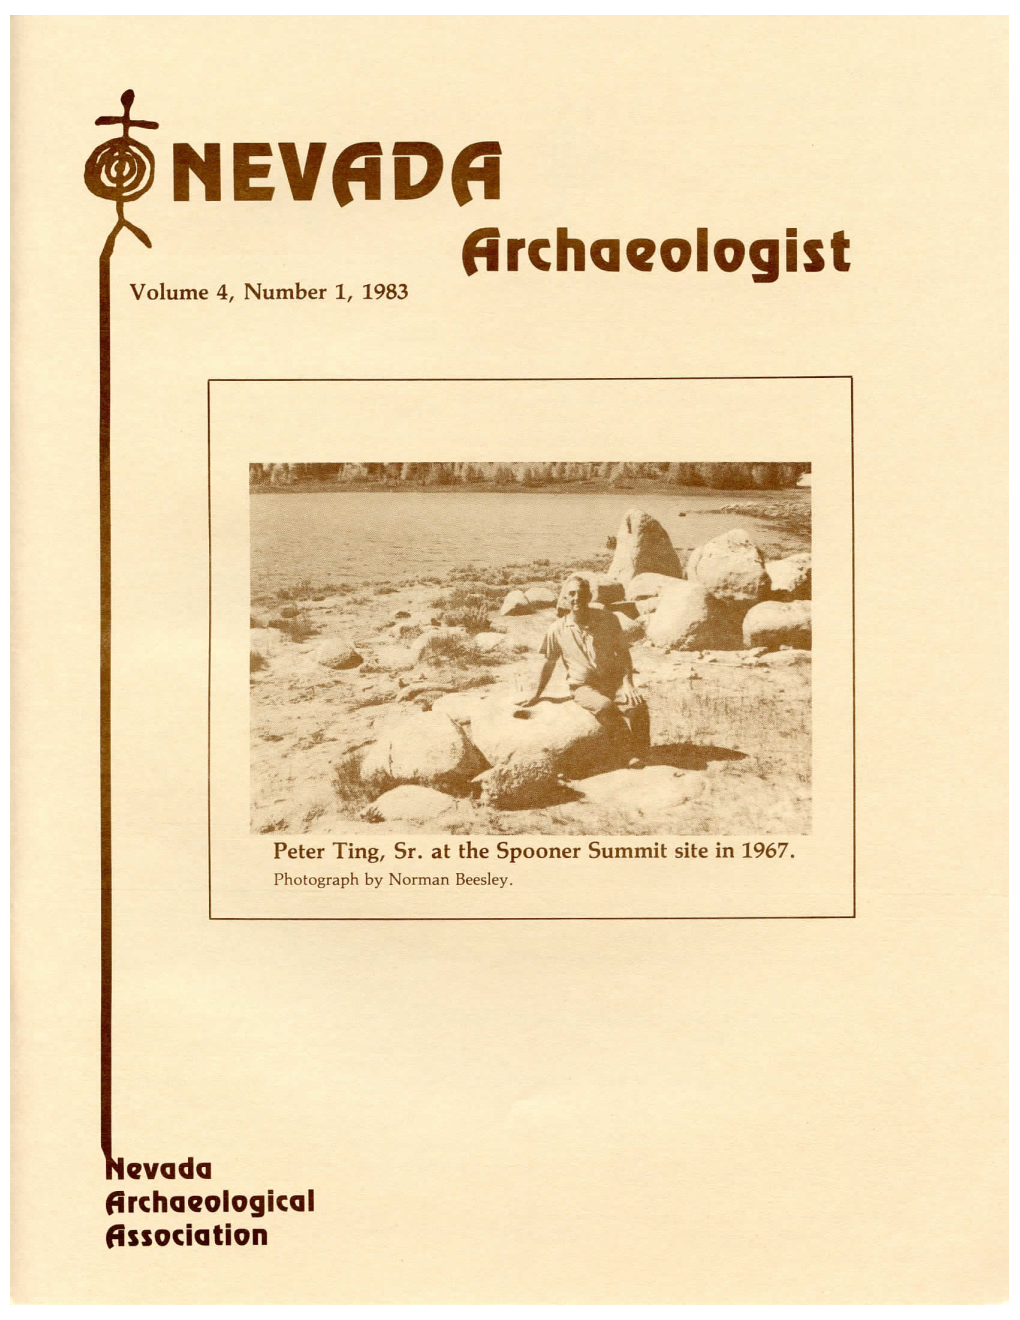 Nevada Archaeological Association